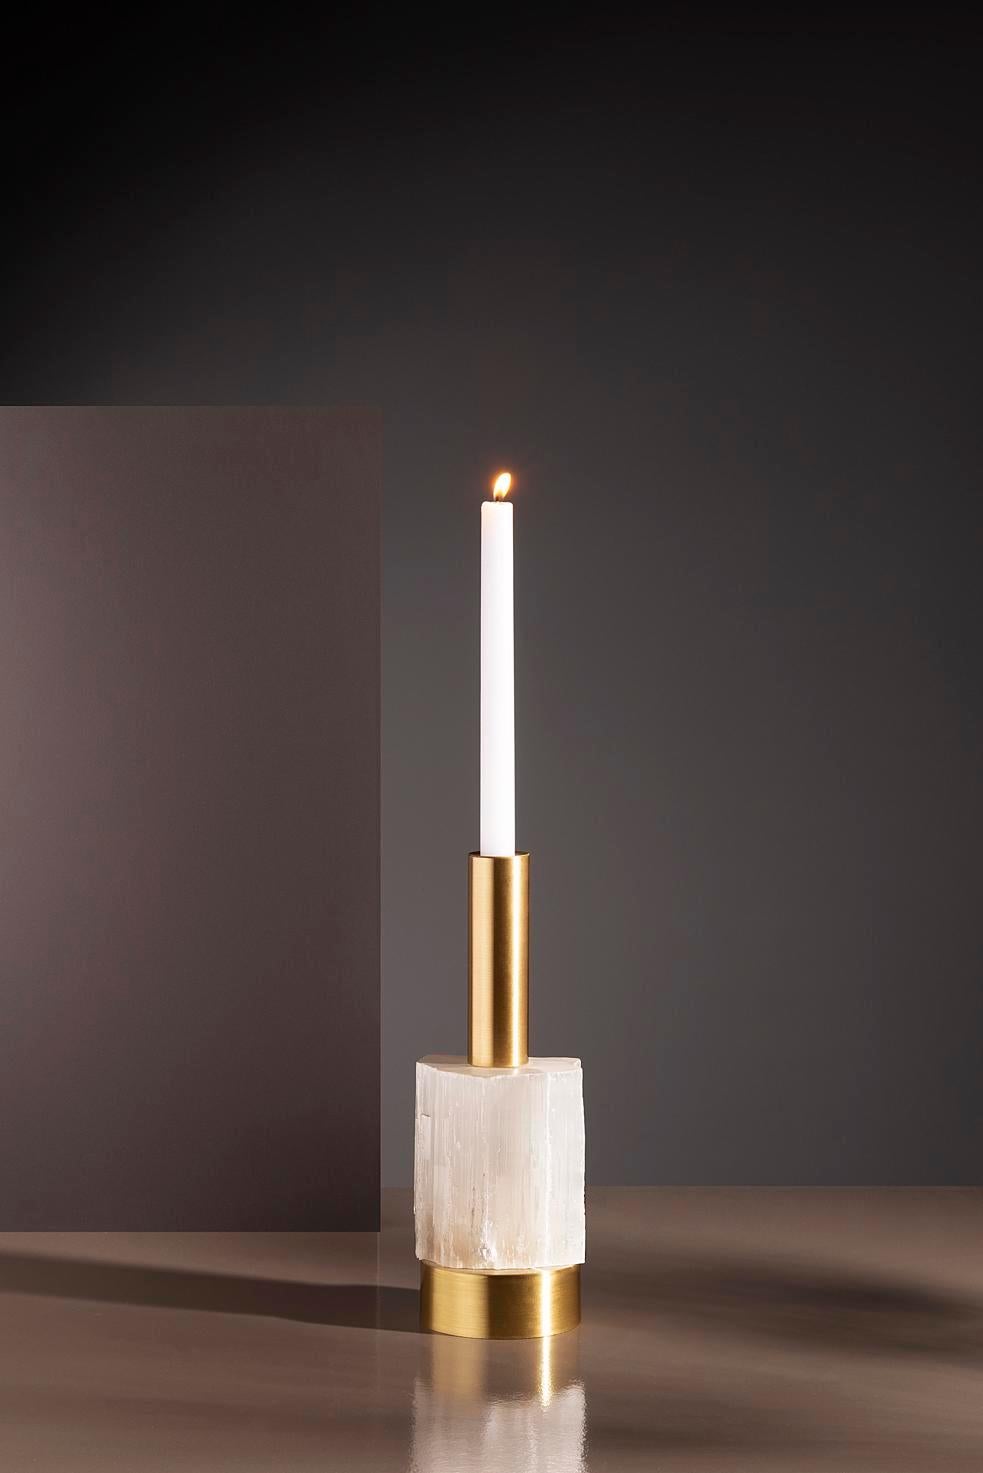 Selenite Cedro candle holder
Dimensions: D 12 x H 29 cm
Materials: Selenite, Steel, Resin.
 